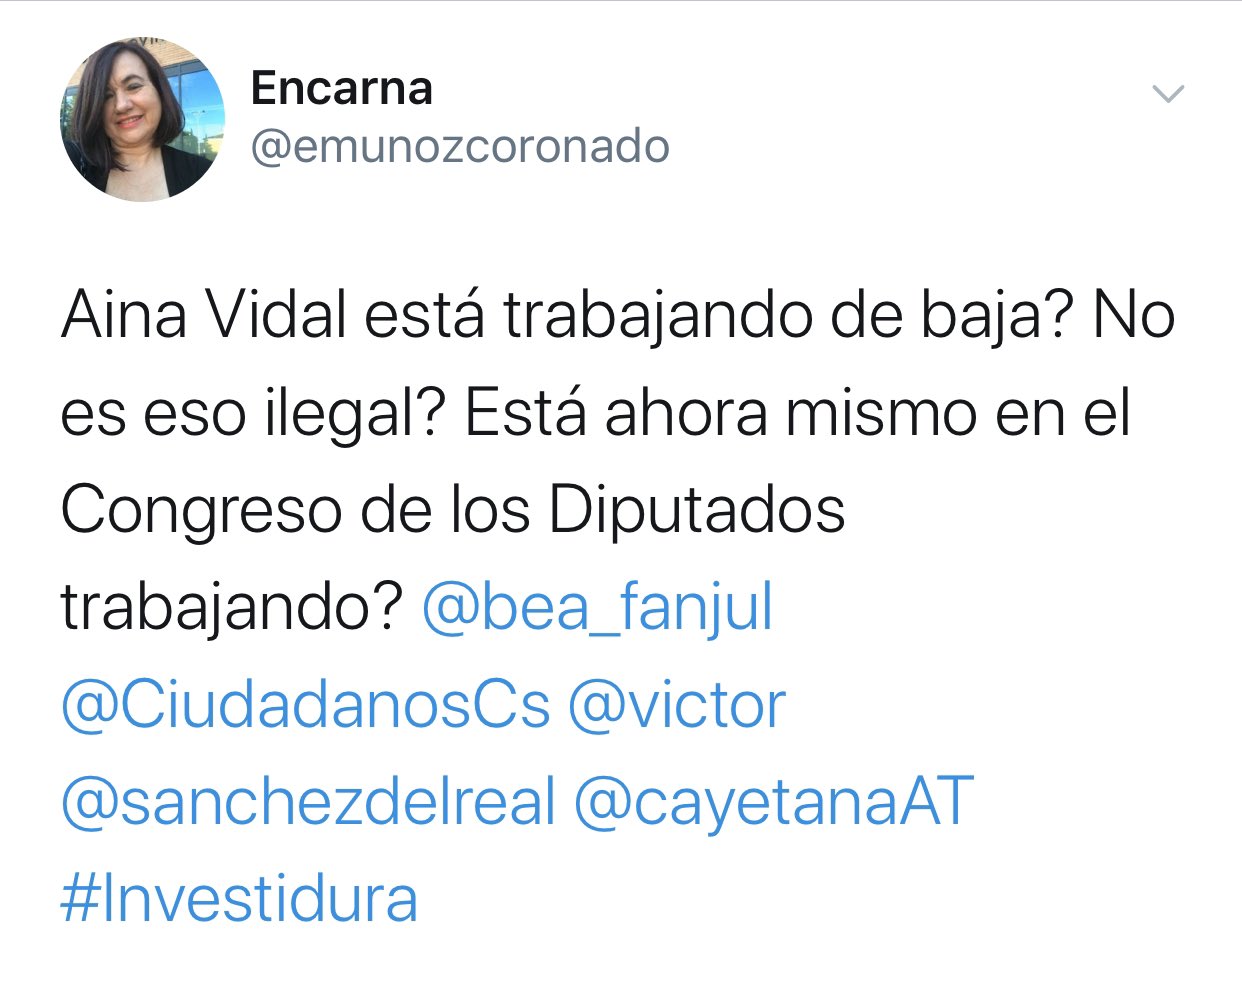 Encarnacion Muñoz contra Aina Vidal Twitter